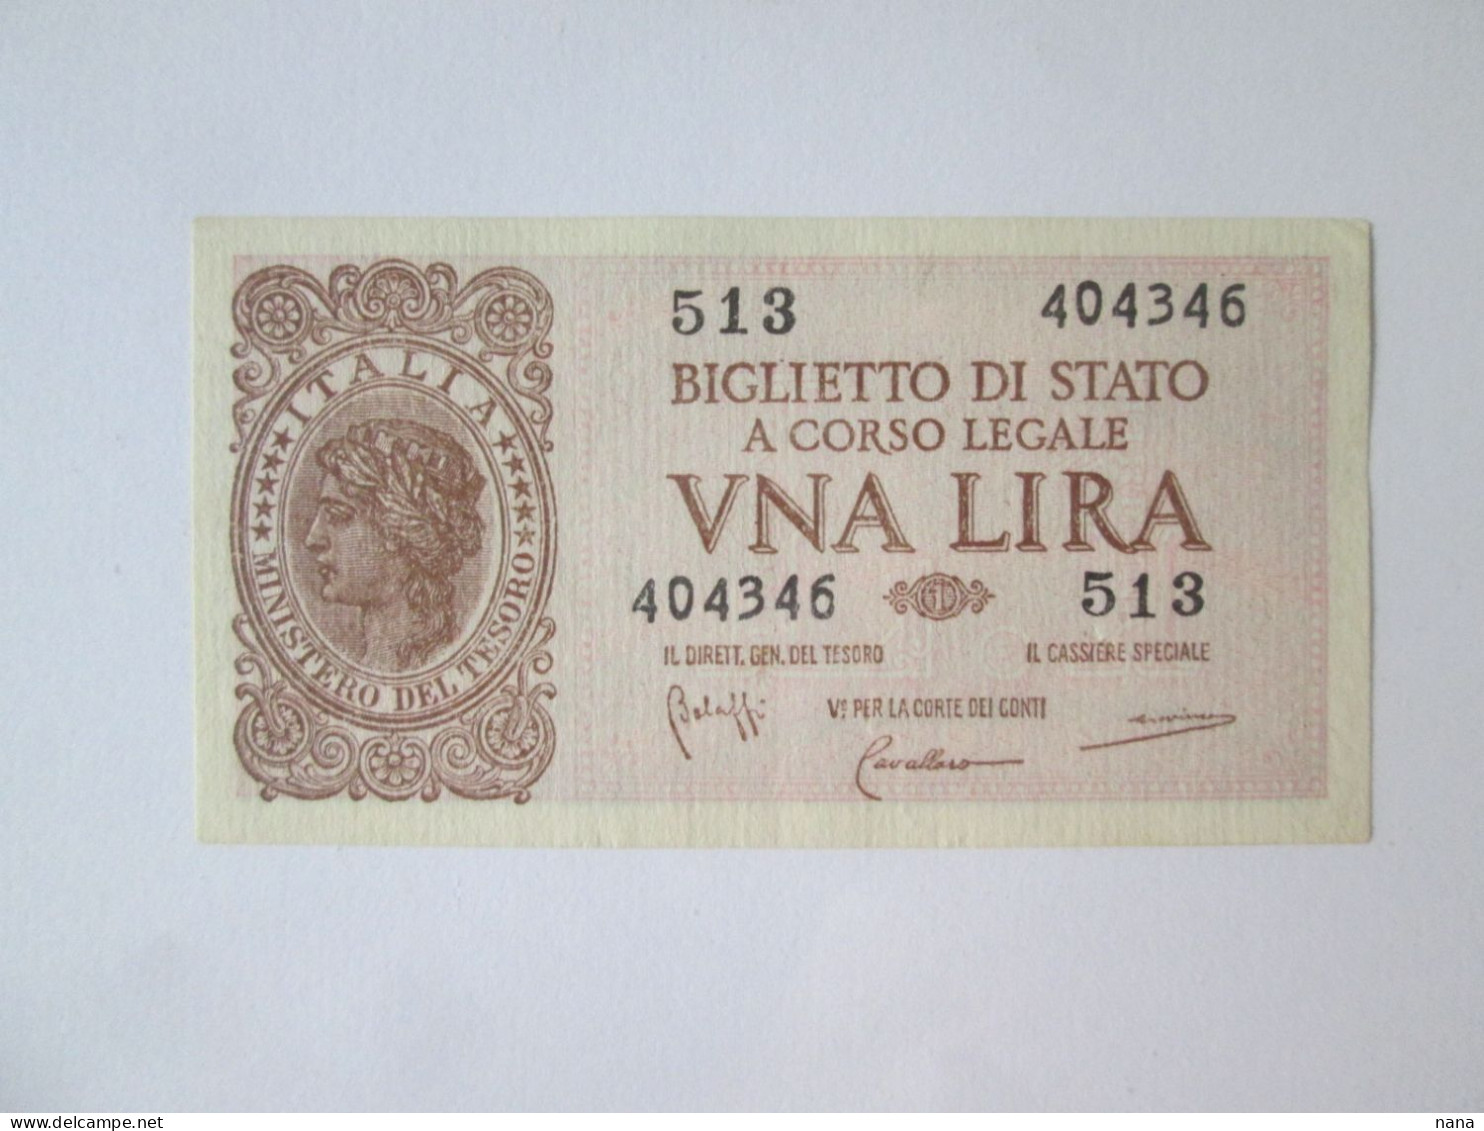 Italy 1 Lira 1944 Banknote See Pictures - Italia – 1 Lira